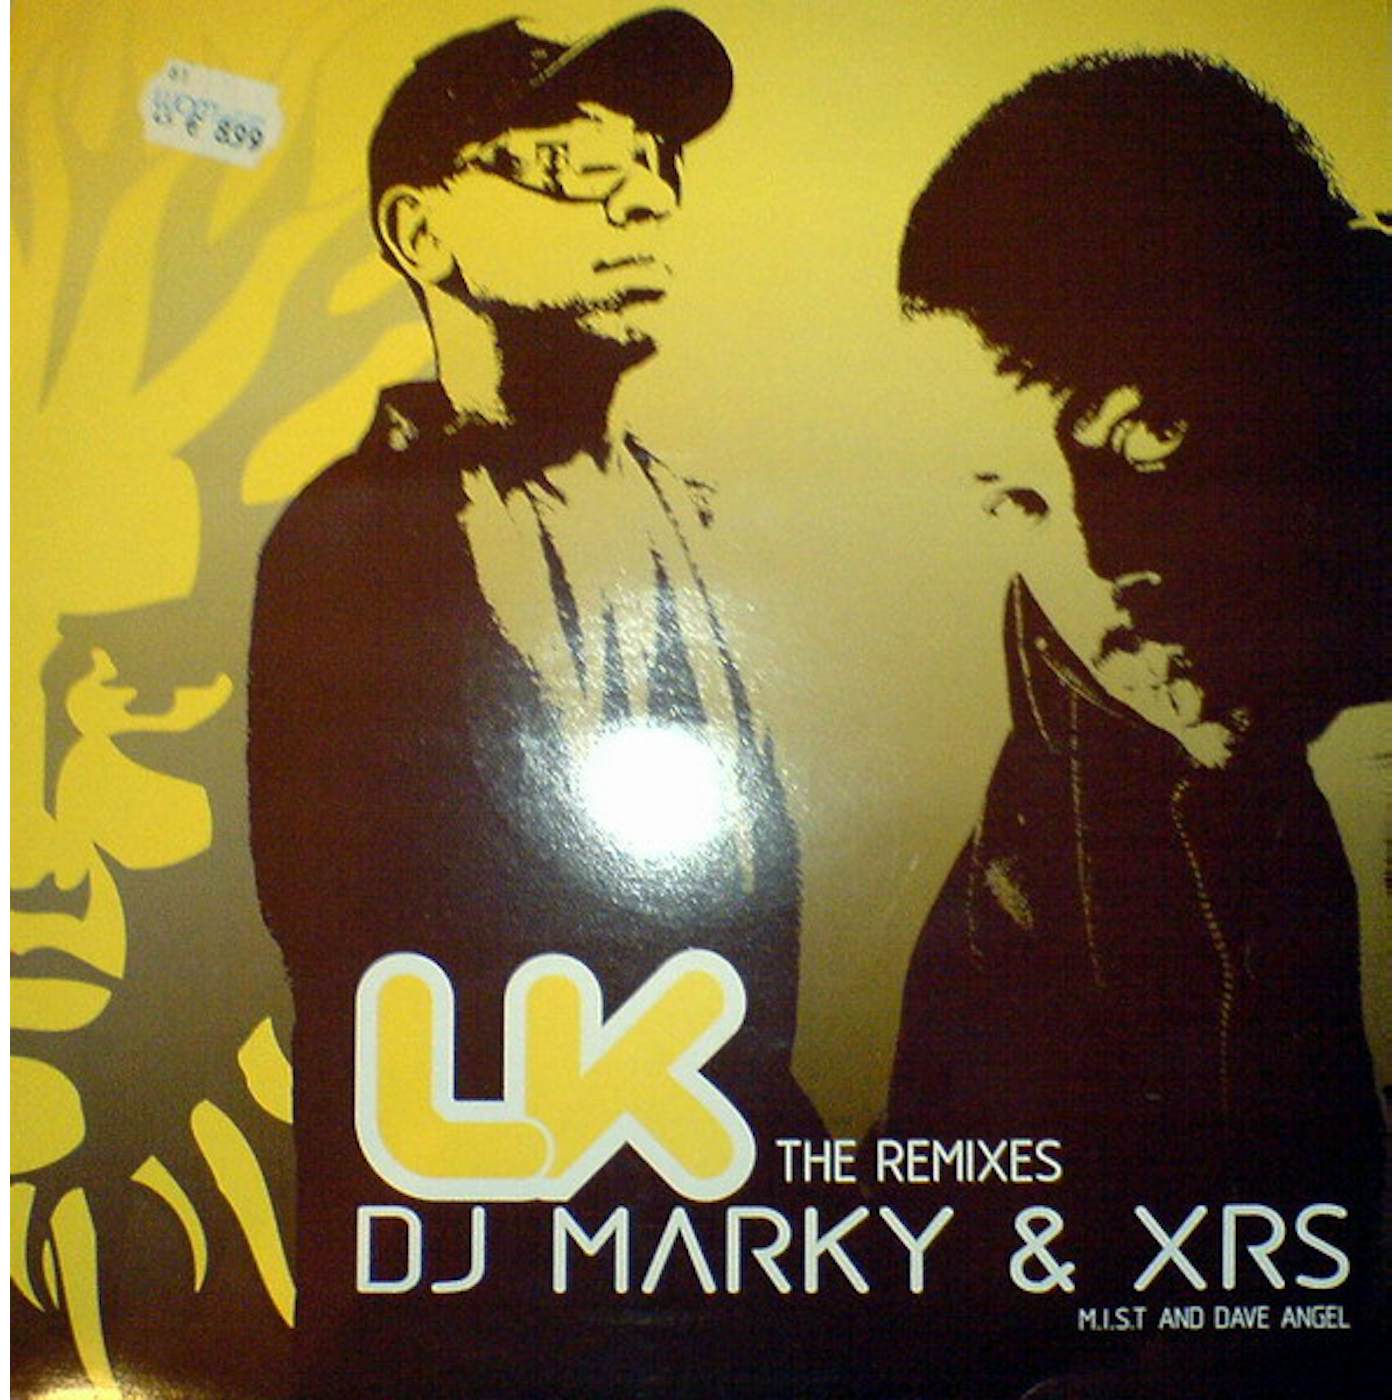 DJ Marky & XRS LK Vinyl Record